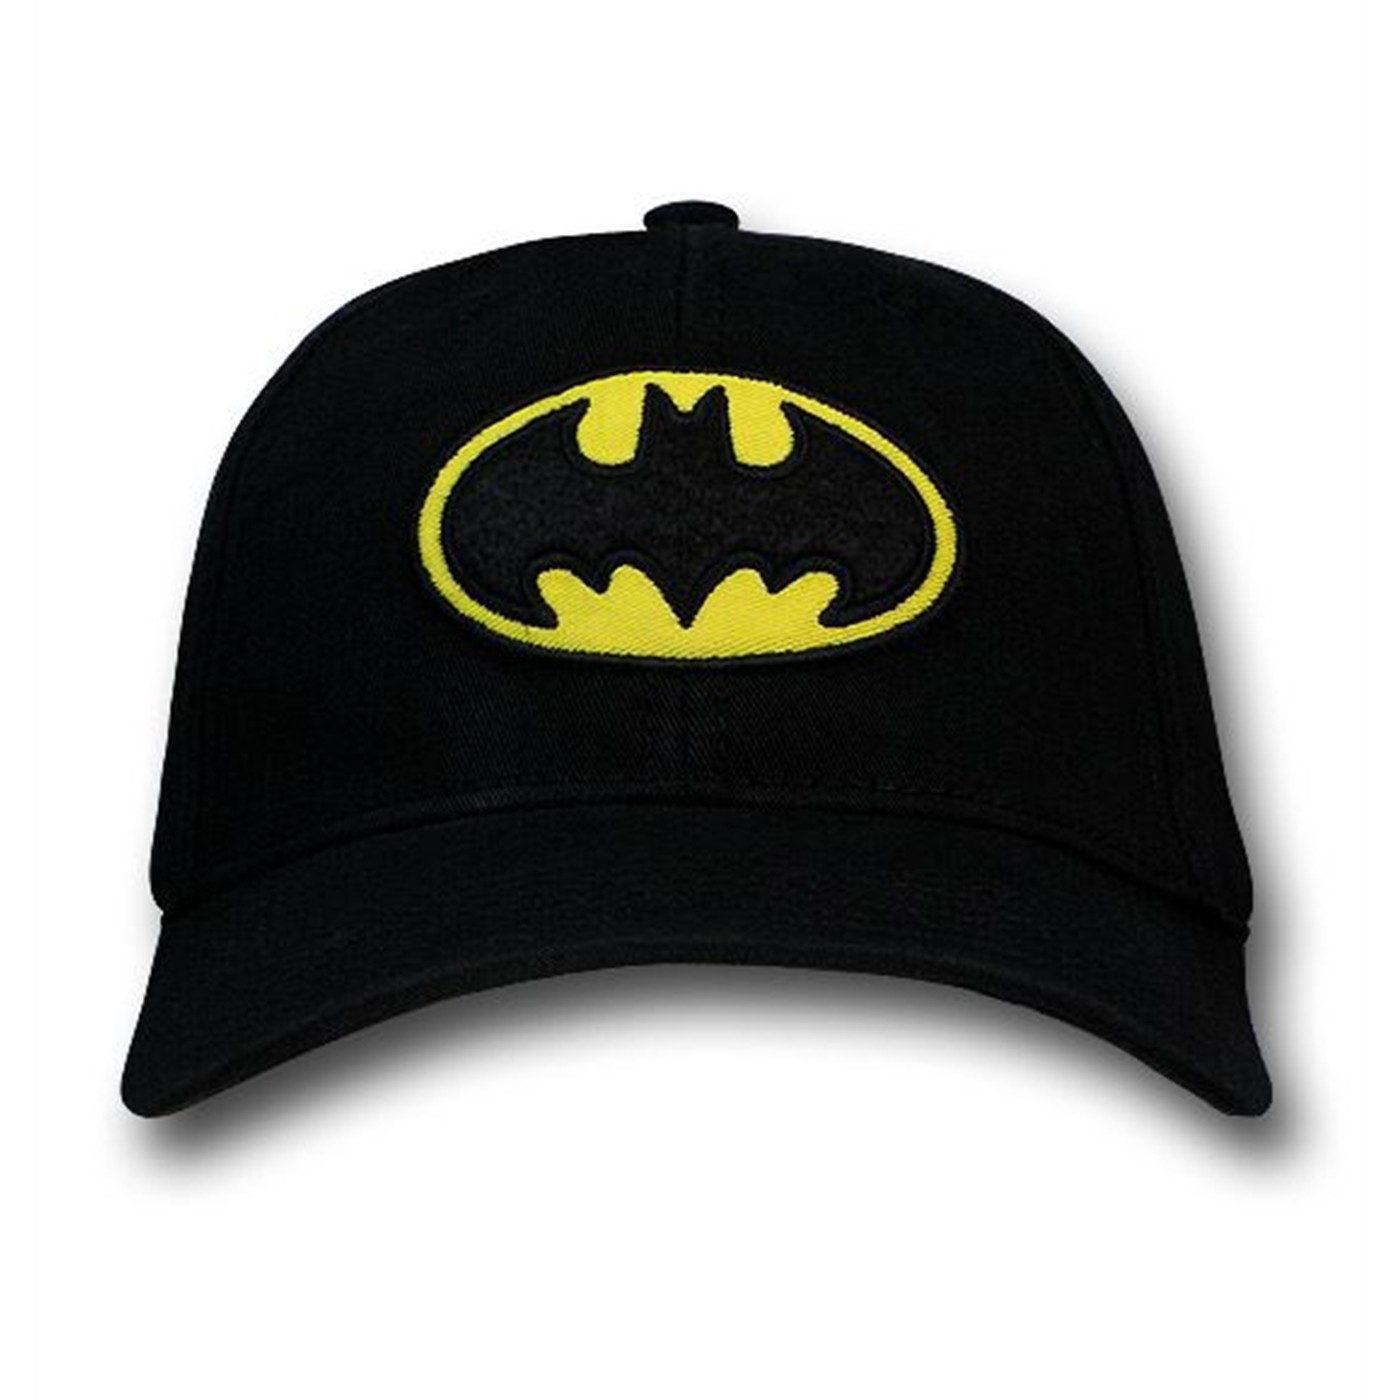 Batman Embroidered Symbol Buckled Hat